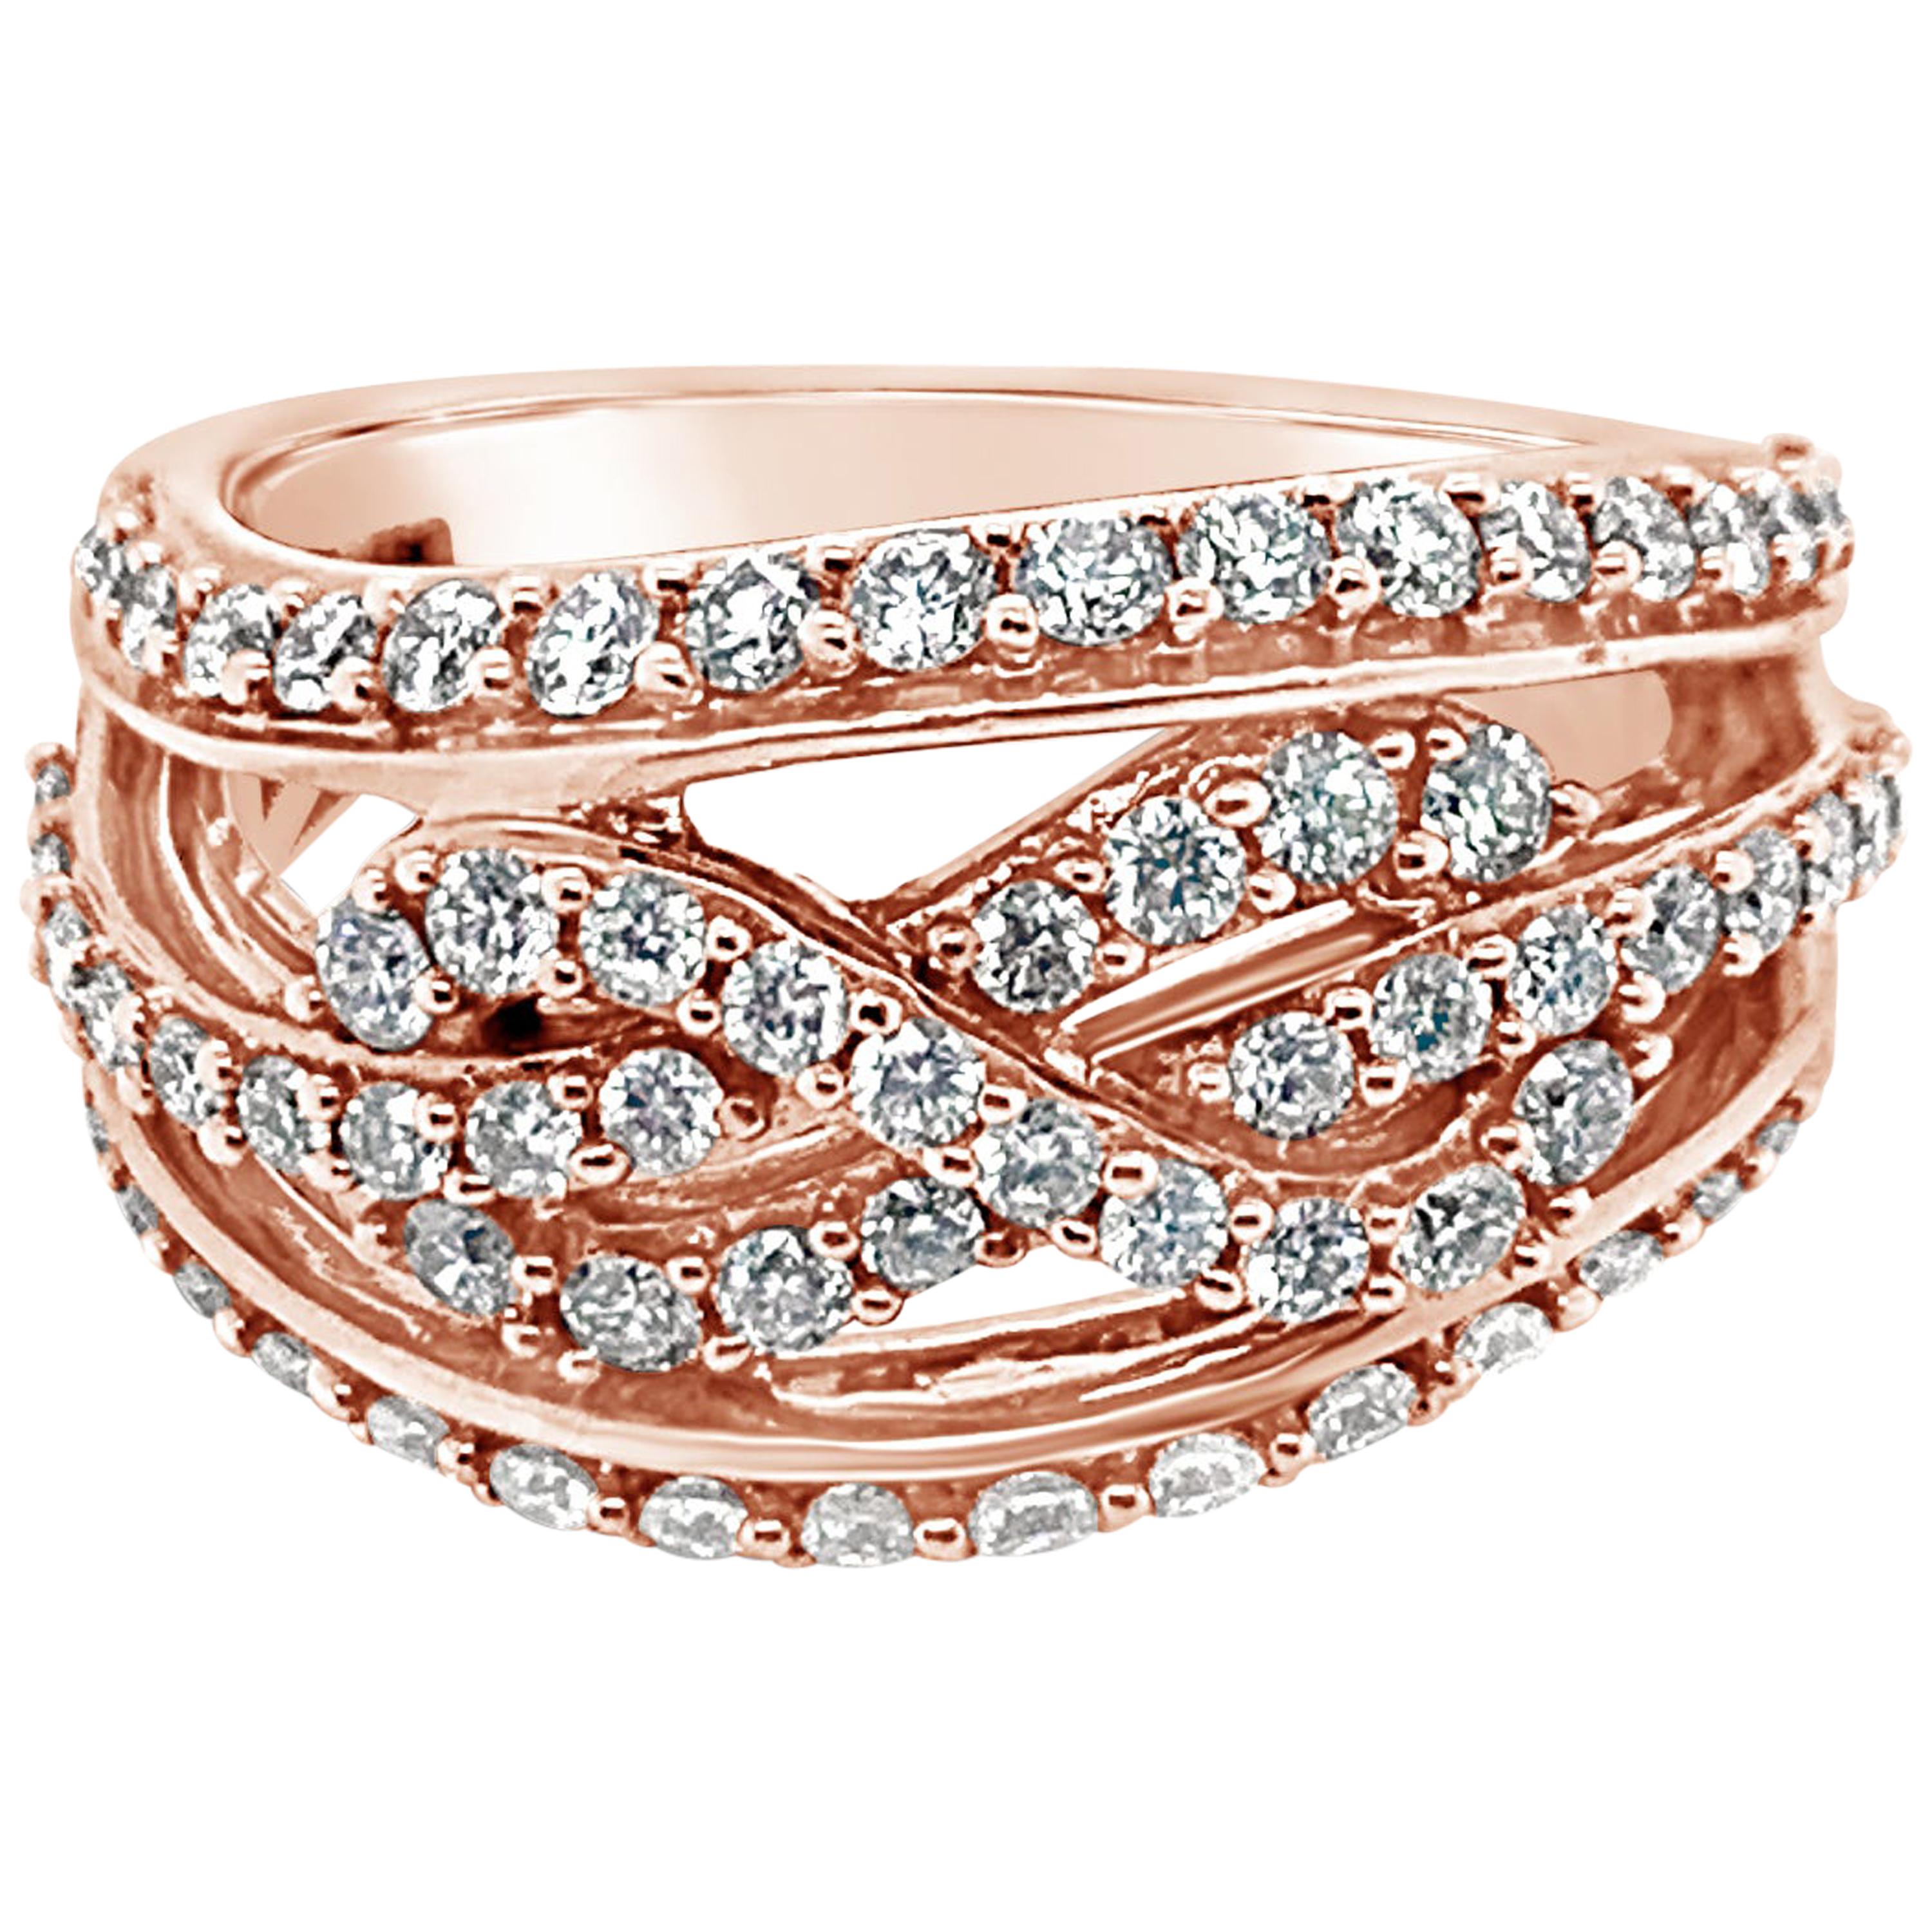 Le Vian Ring Featuring Vanilla Diamonds, 14 Karat Strawberry Gold